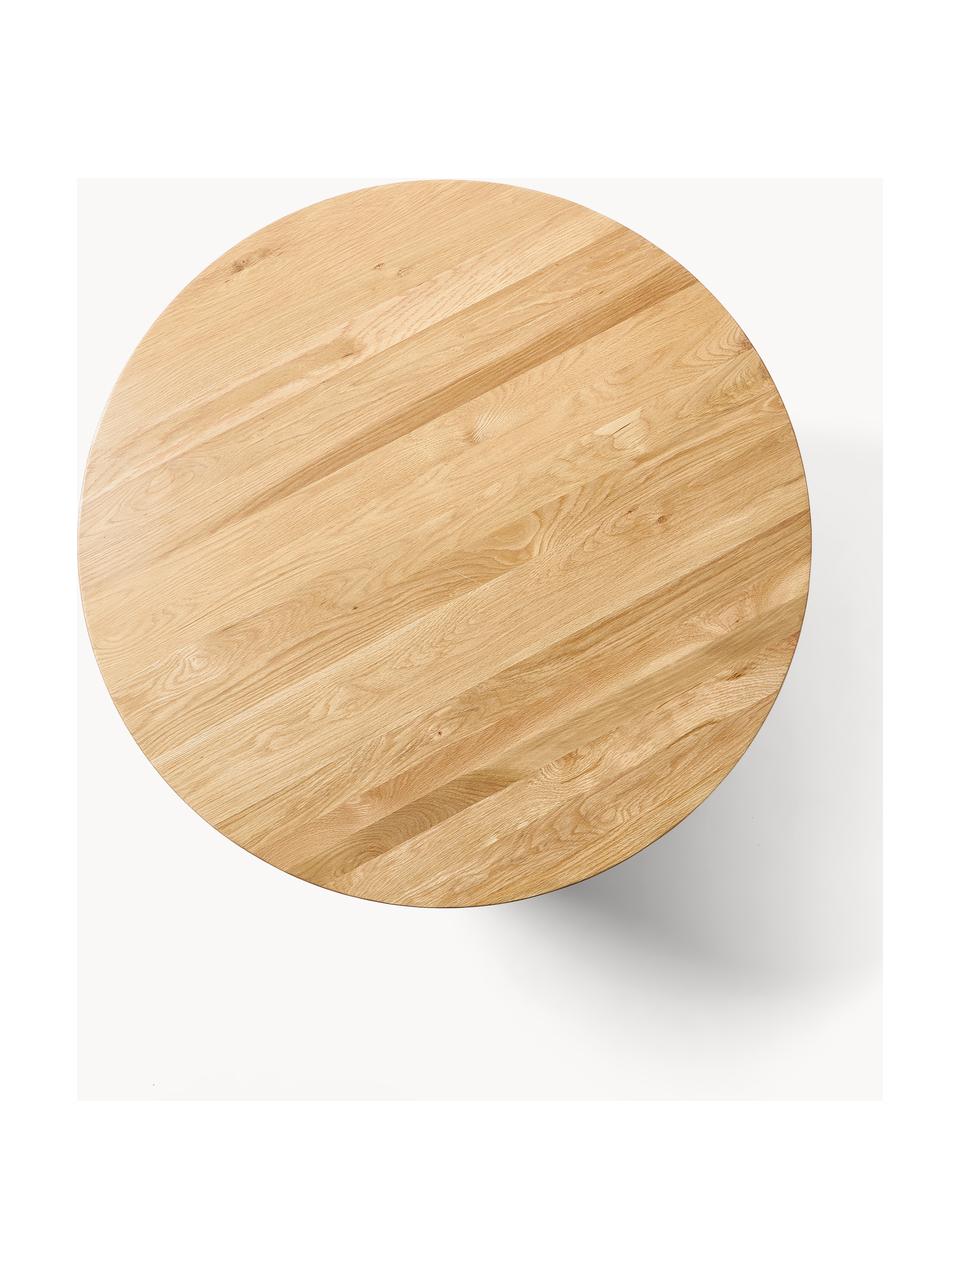 Runder Esstisch Ohana aus Eichenholz, Ø 120 cm, Massives Eichenholz, geölt

Dieses Produkt wird aus nachhaltig gewonnenem, FSC®-zertifiziertem Holz gefertigt., Eichenholz, hell geölt, Ø 120 cm